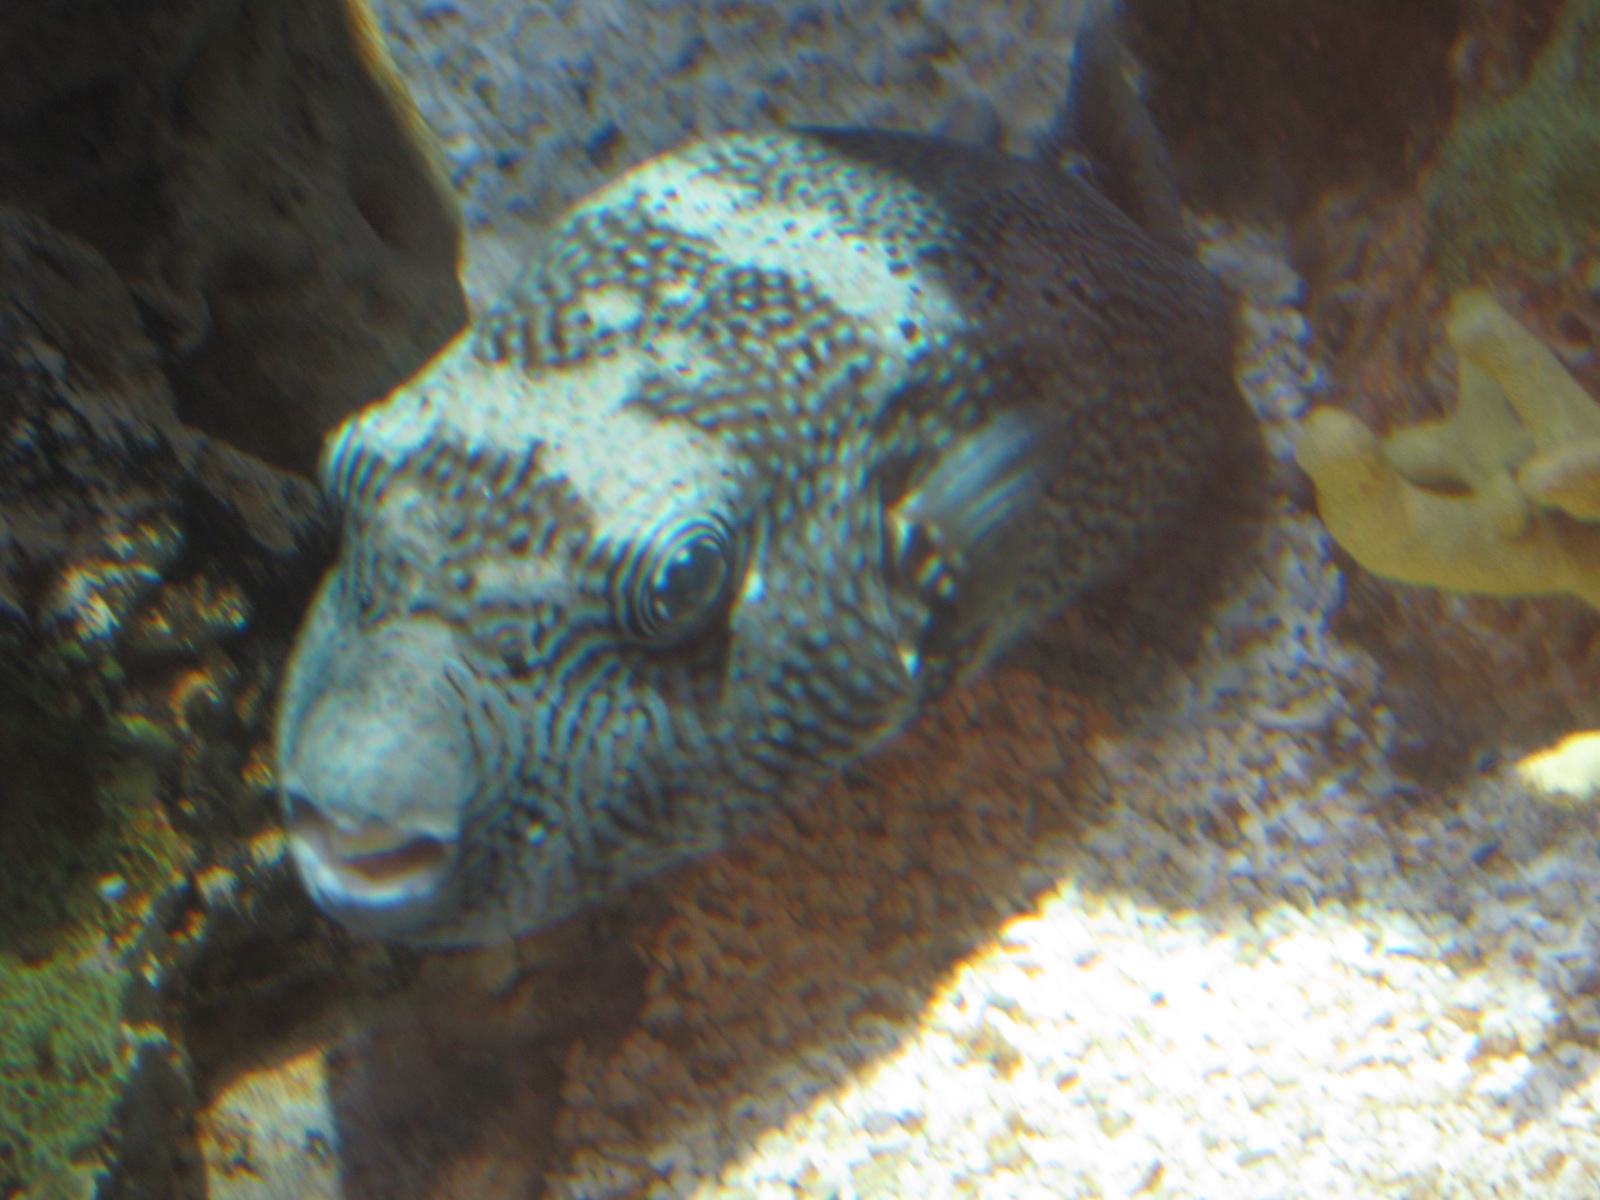 a fish in an aquarium resting on the rocks